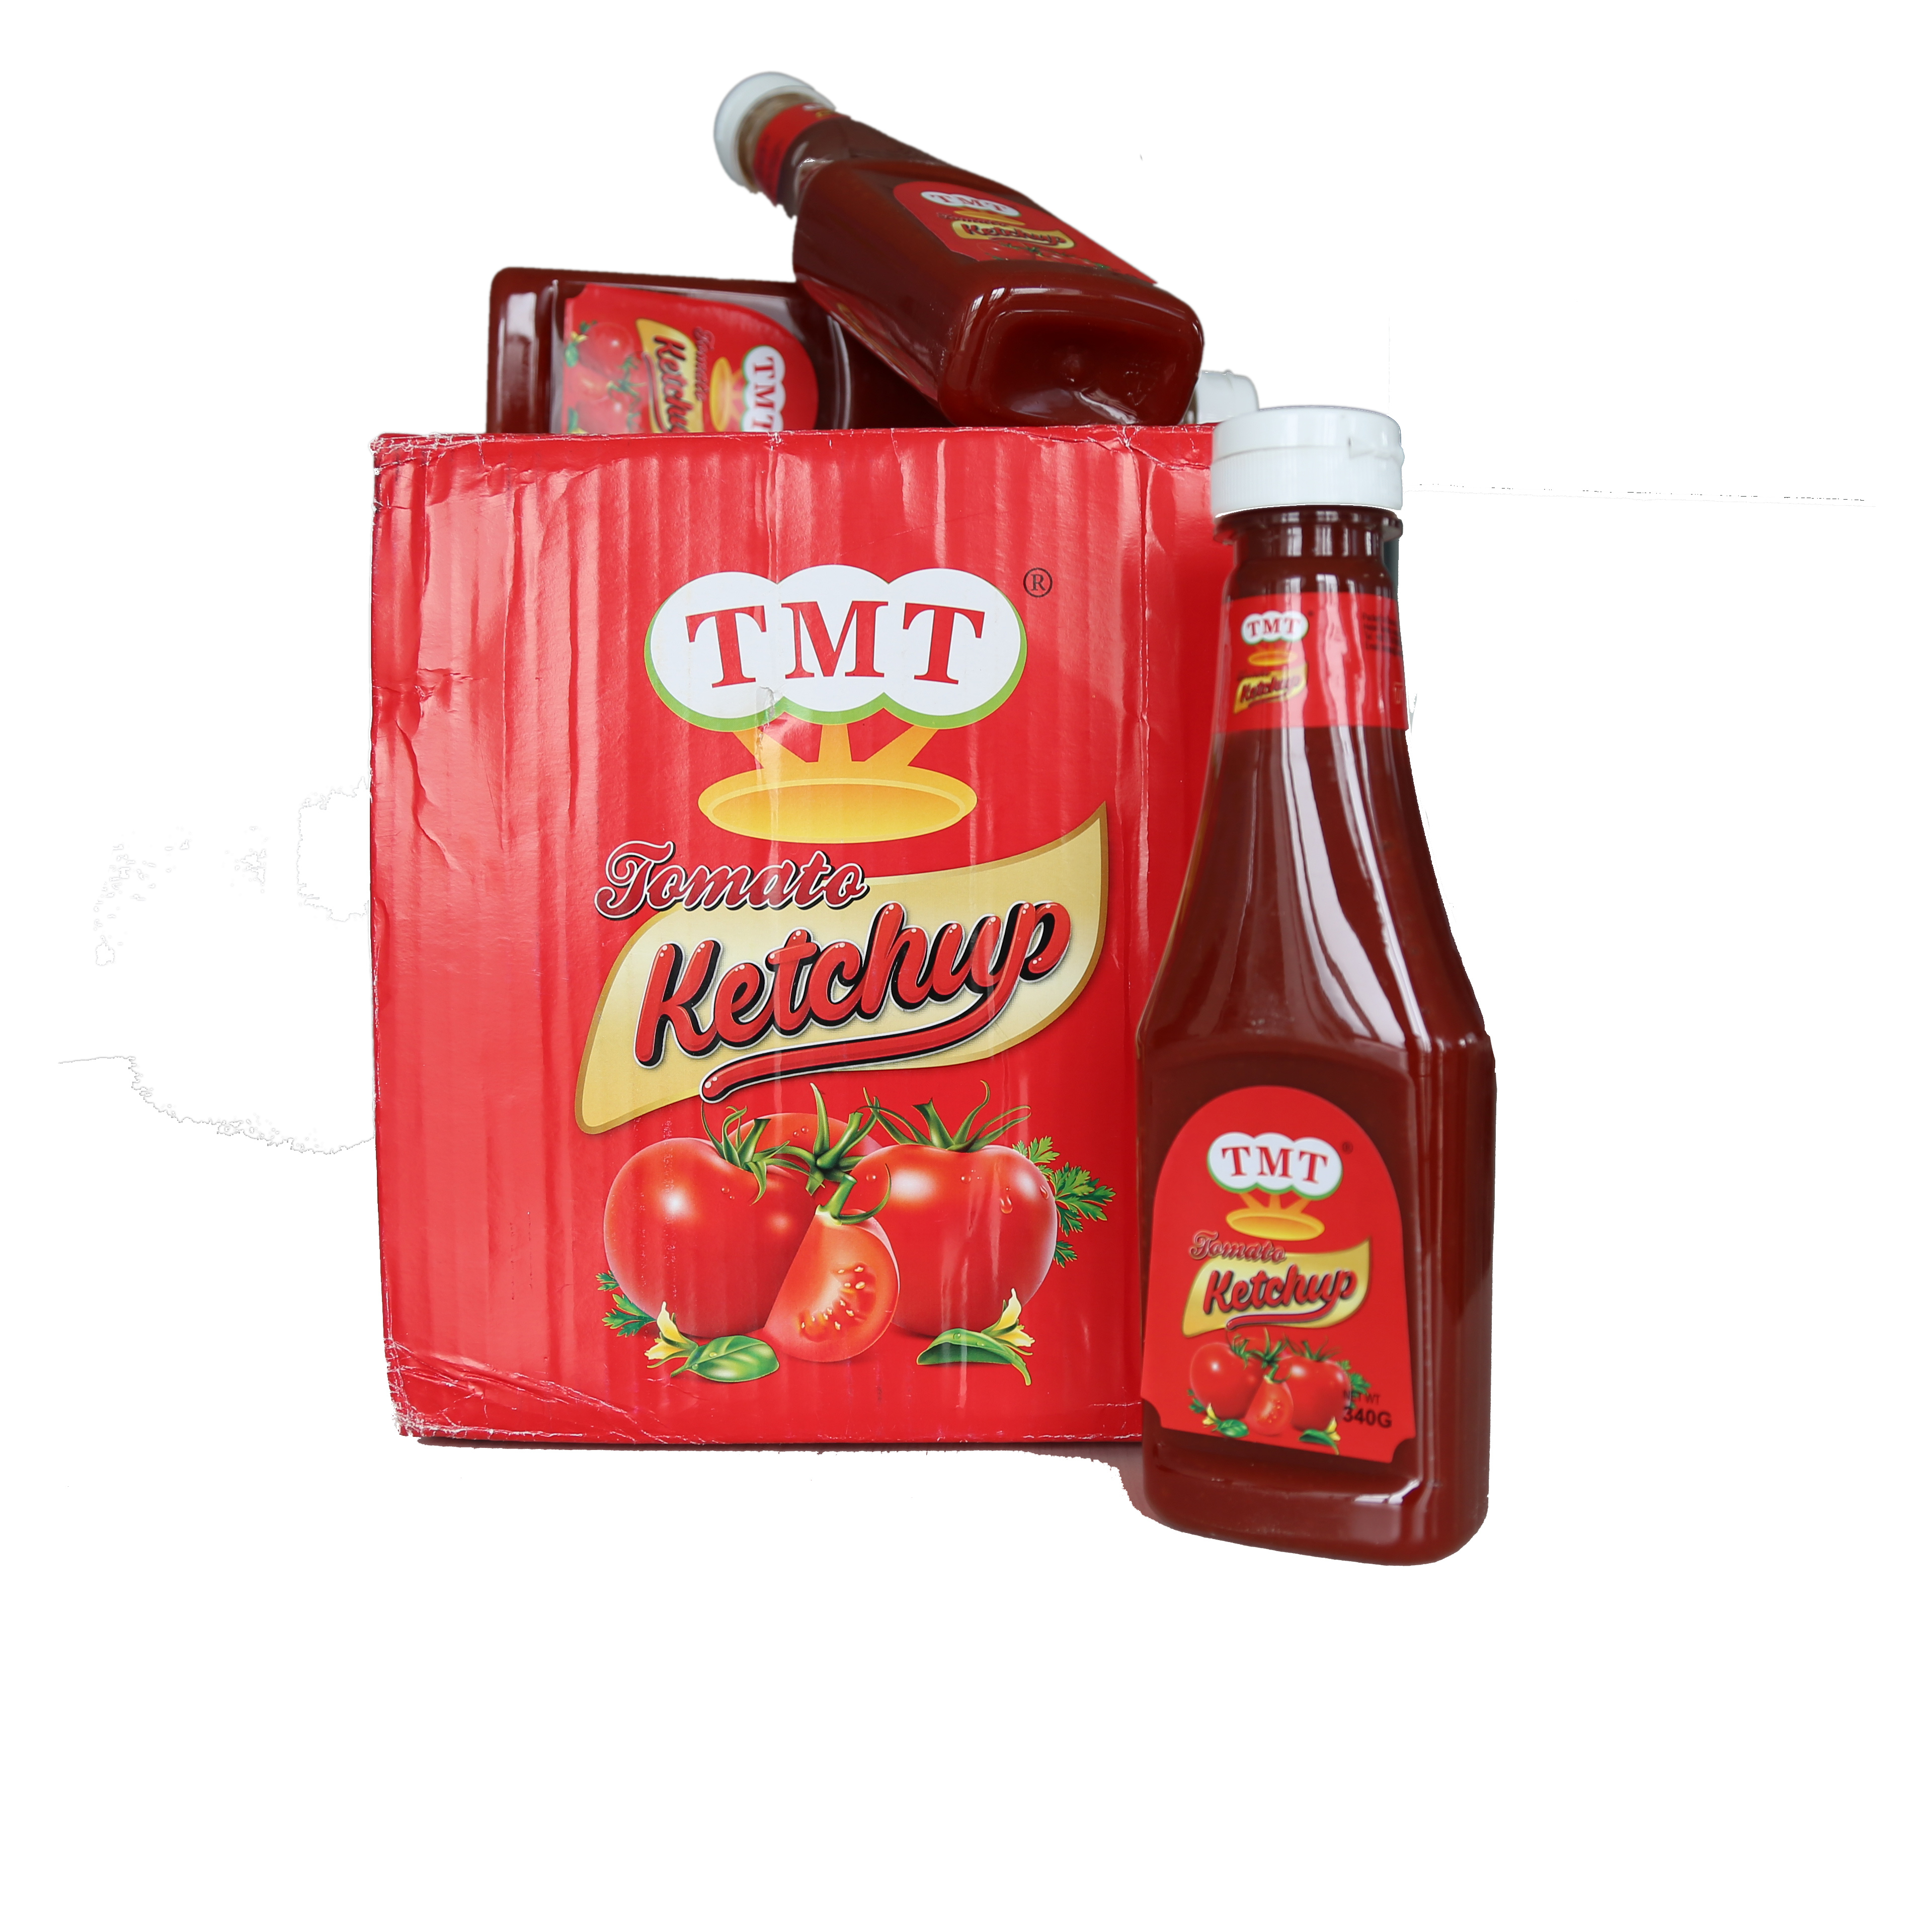 OEM tumatir ketchup sauce High Quality Mafi kyawun Ketchup